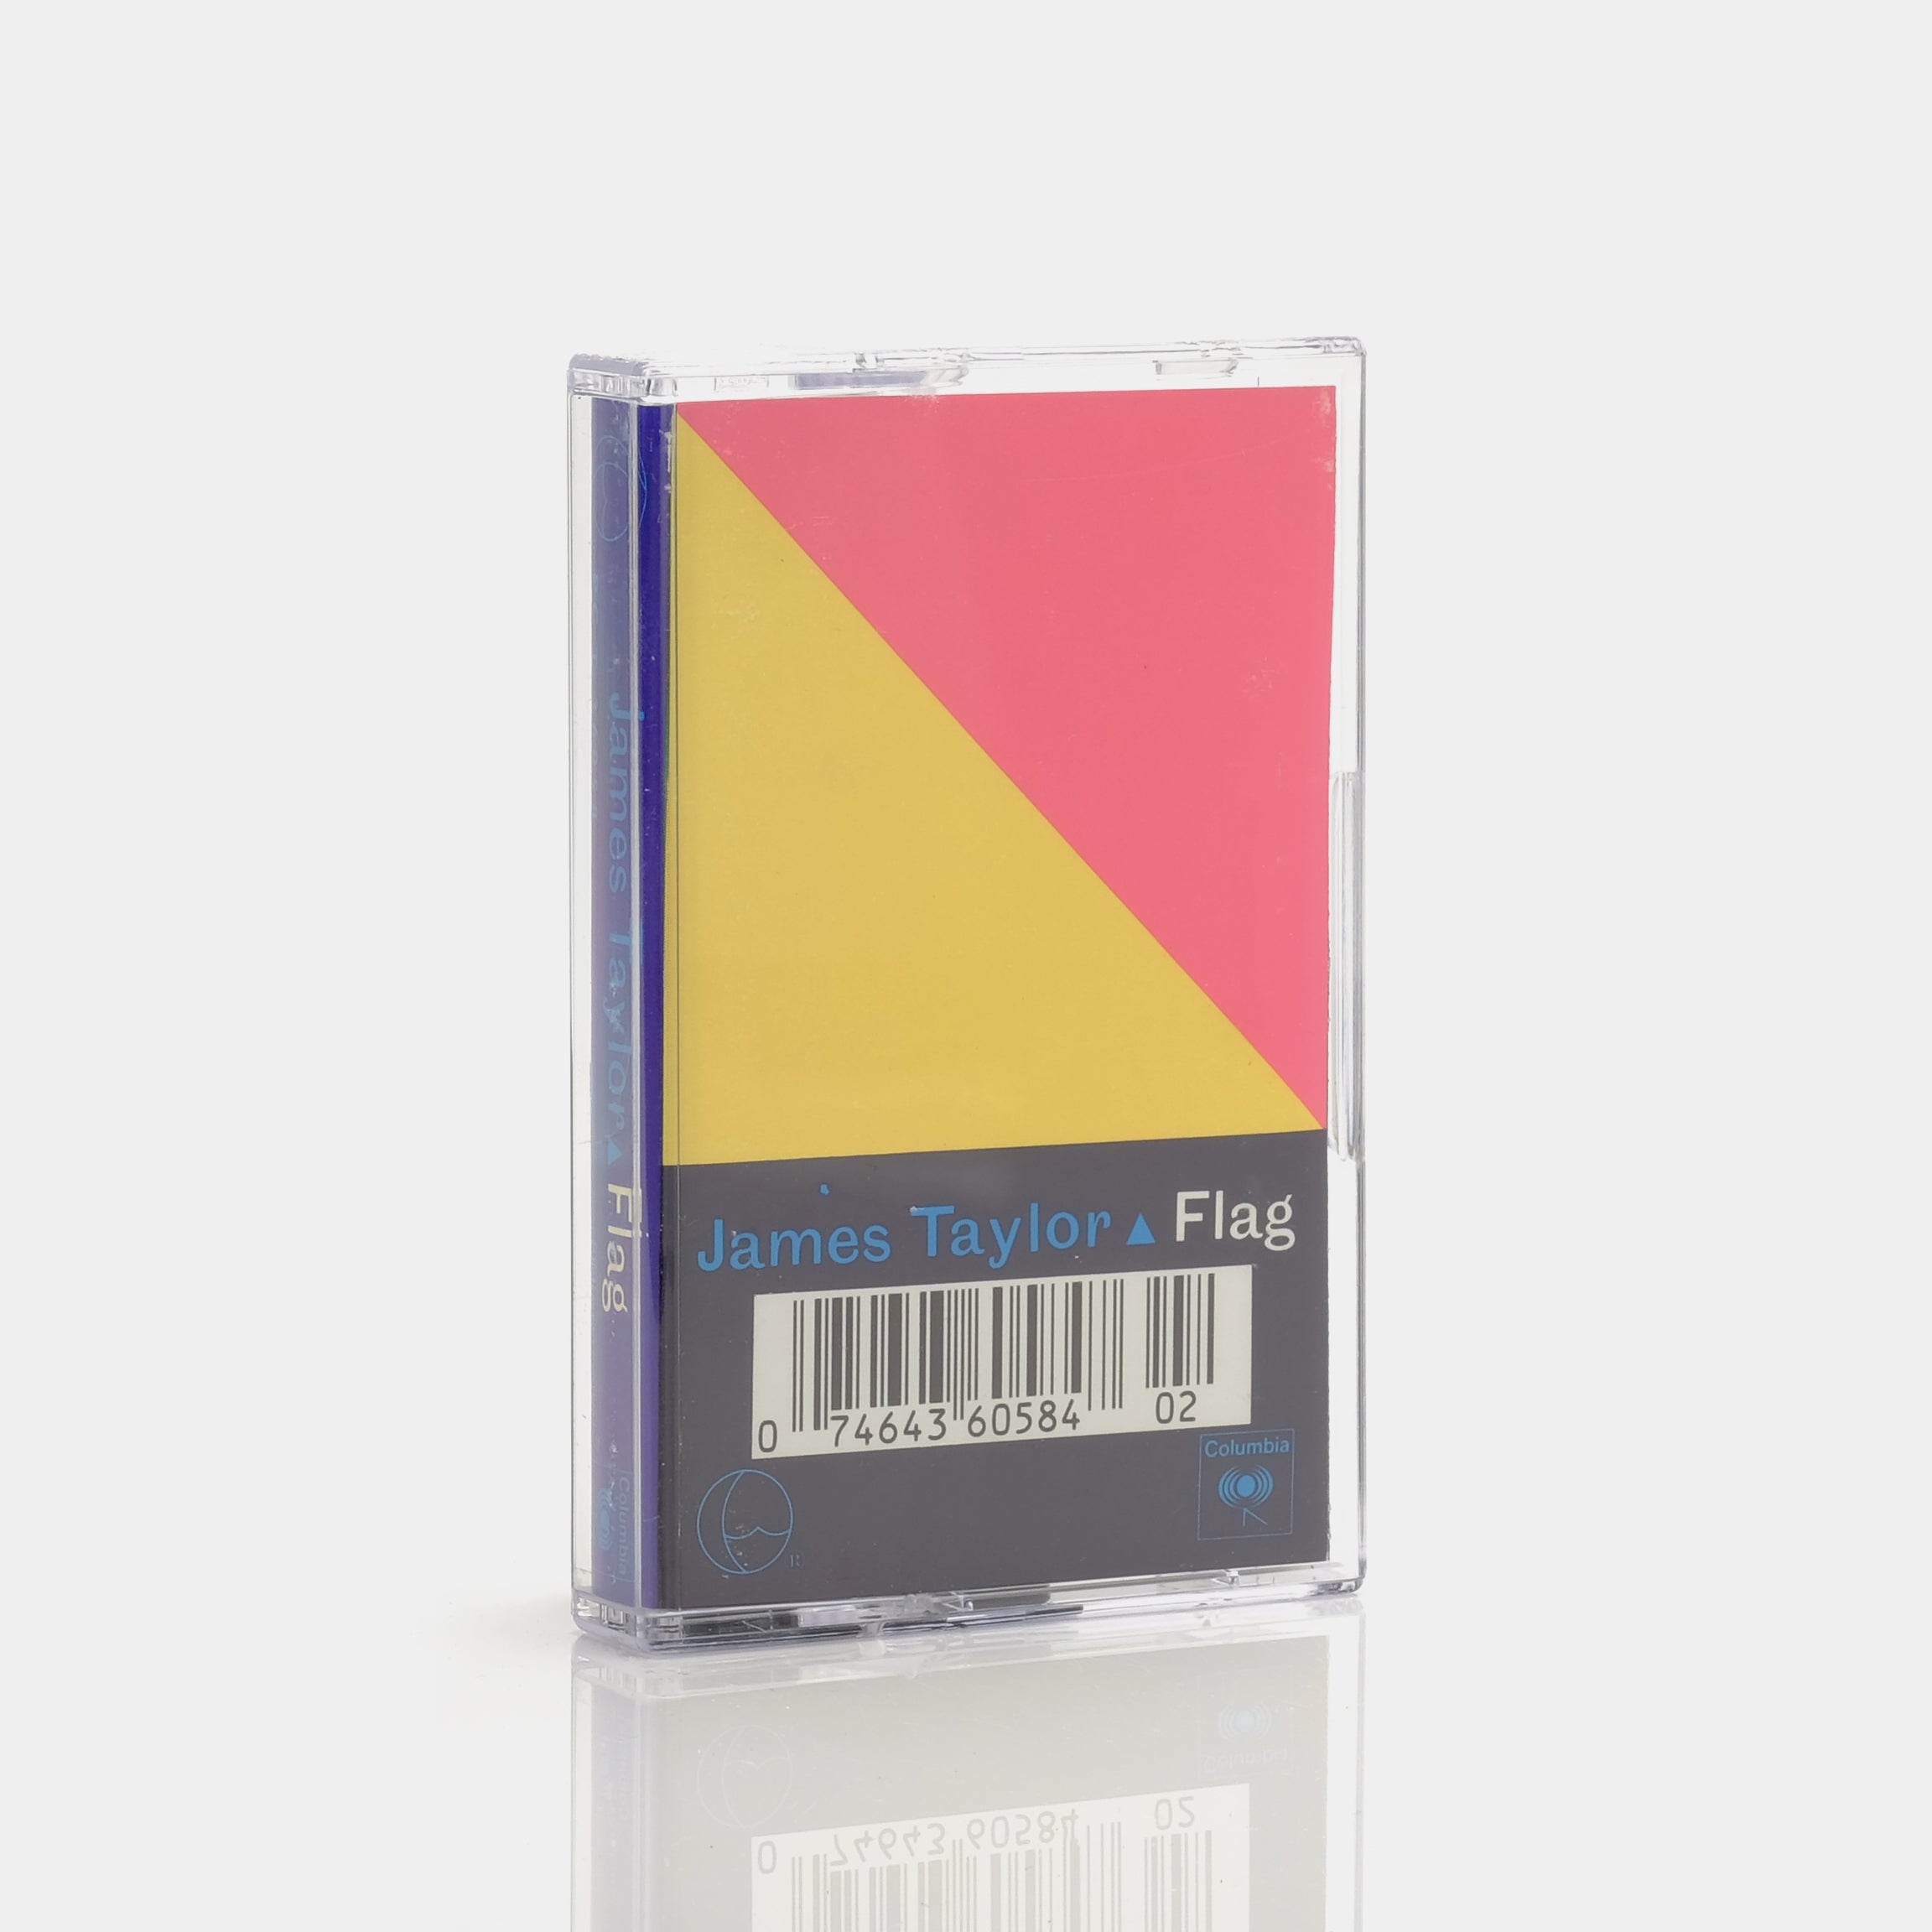 James Taylor - Flag Cassette Tape